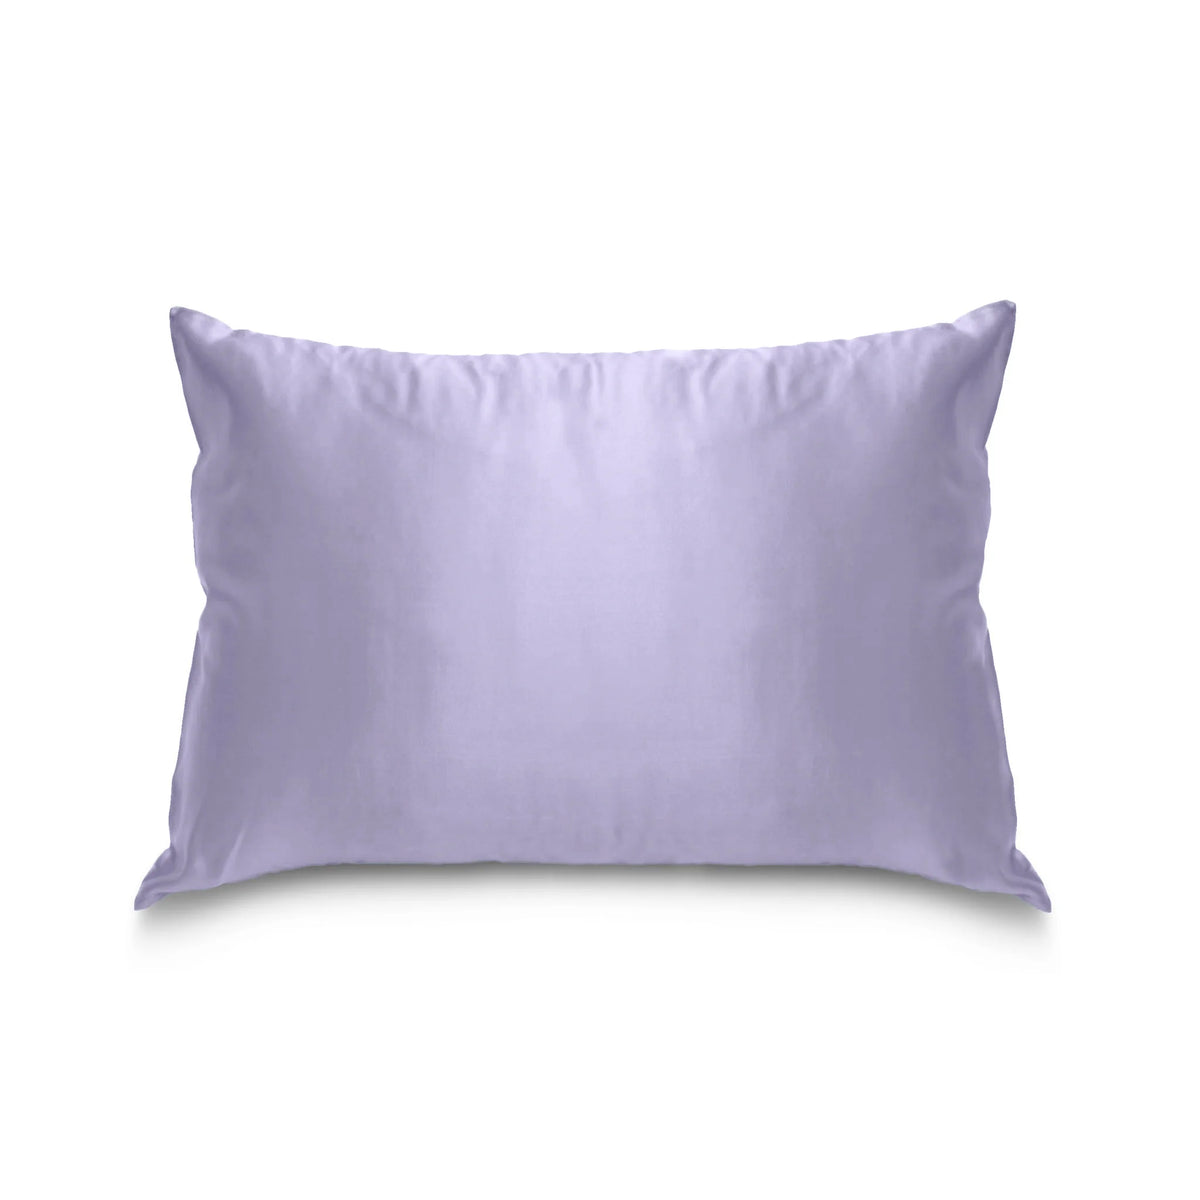 Silk Pillowcase for Travel - Lilac